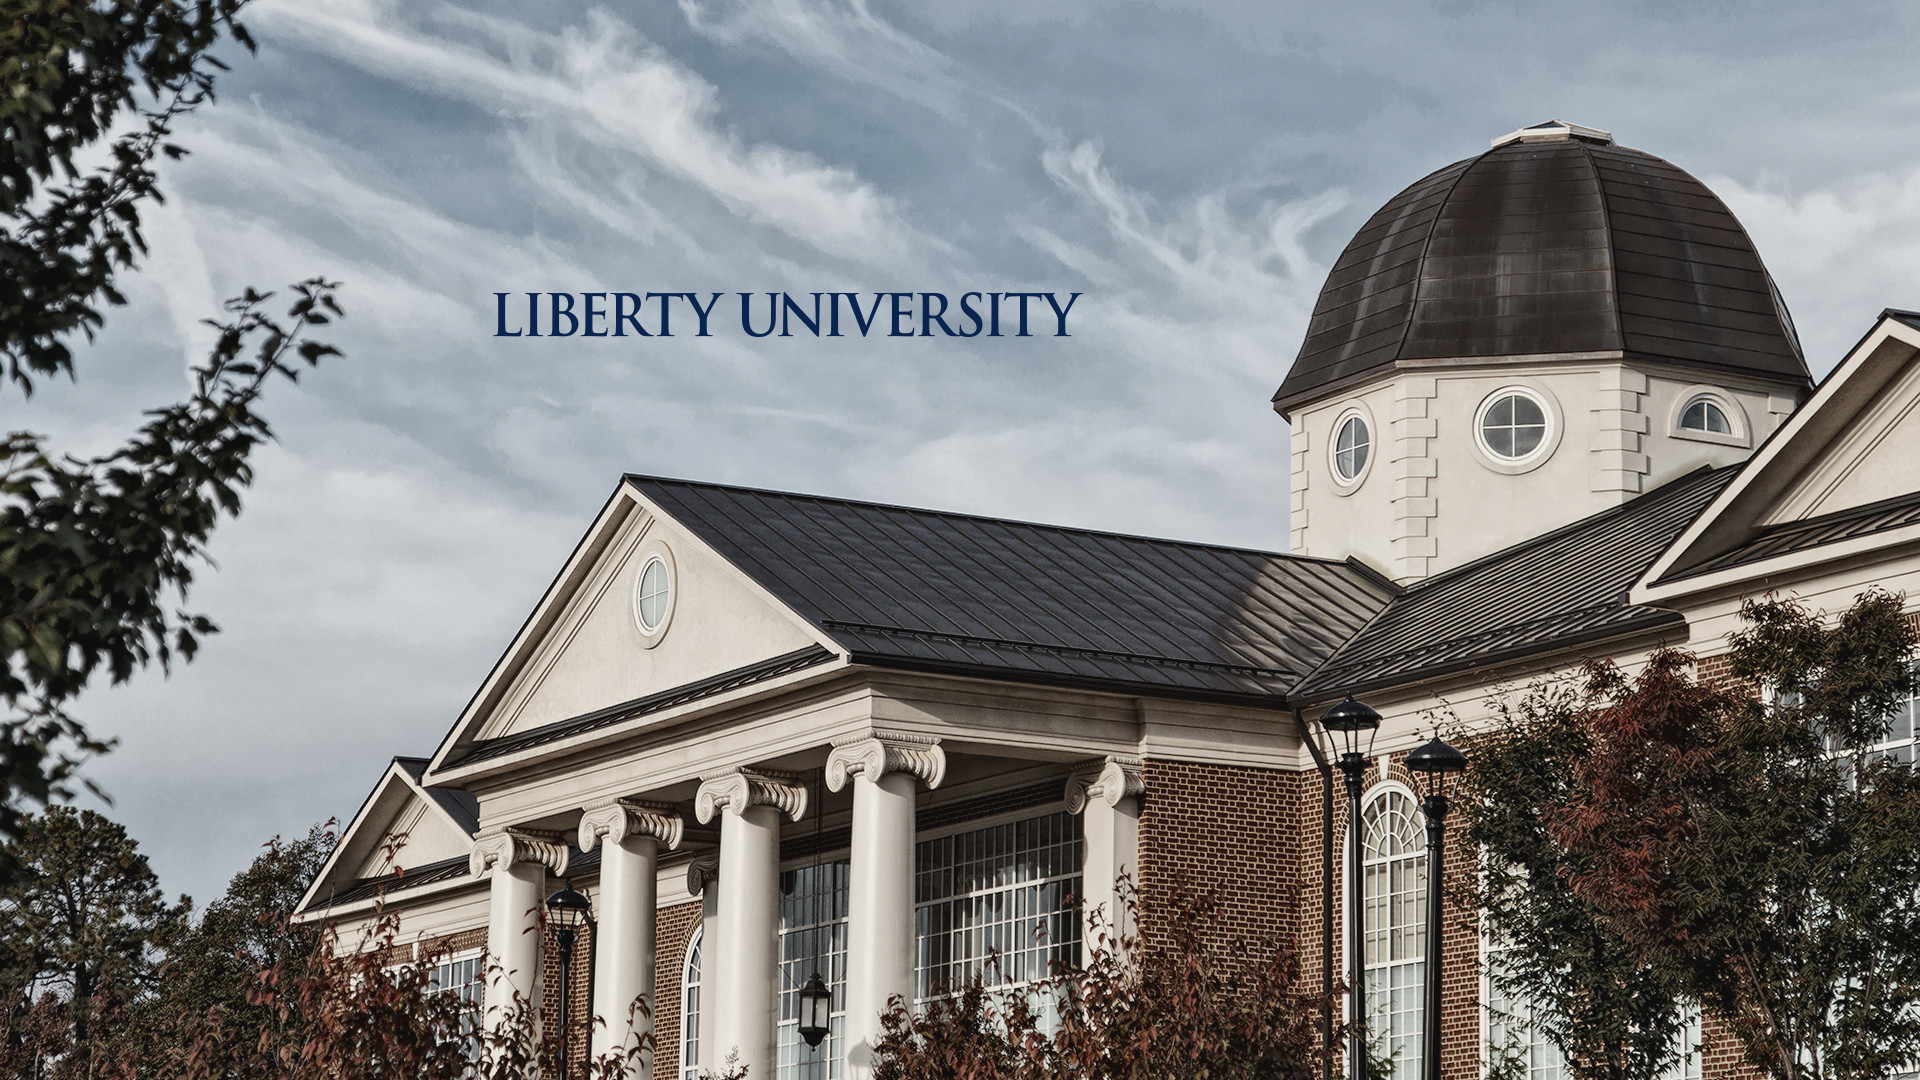 Marketing Department Background Images Liberty University